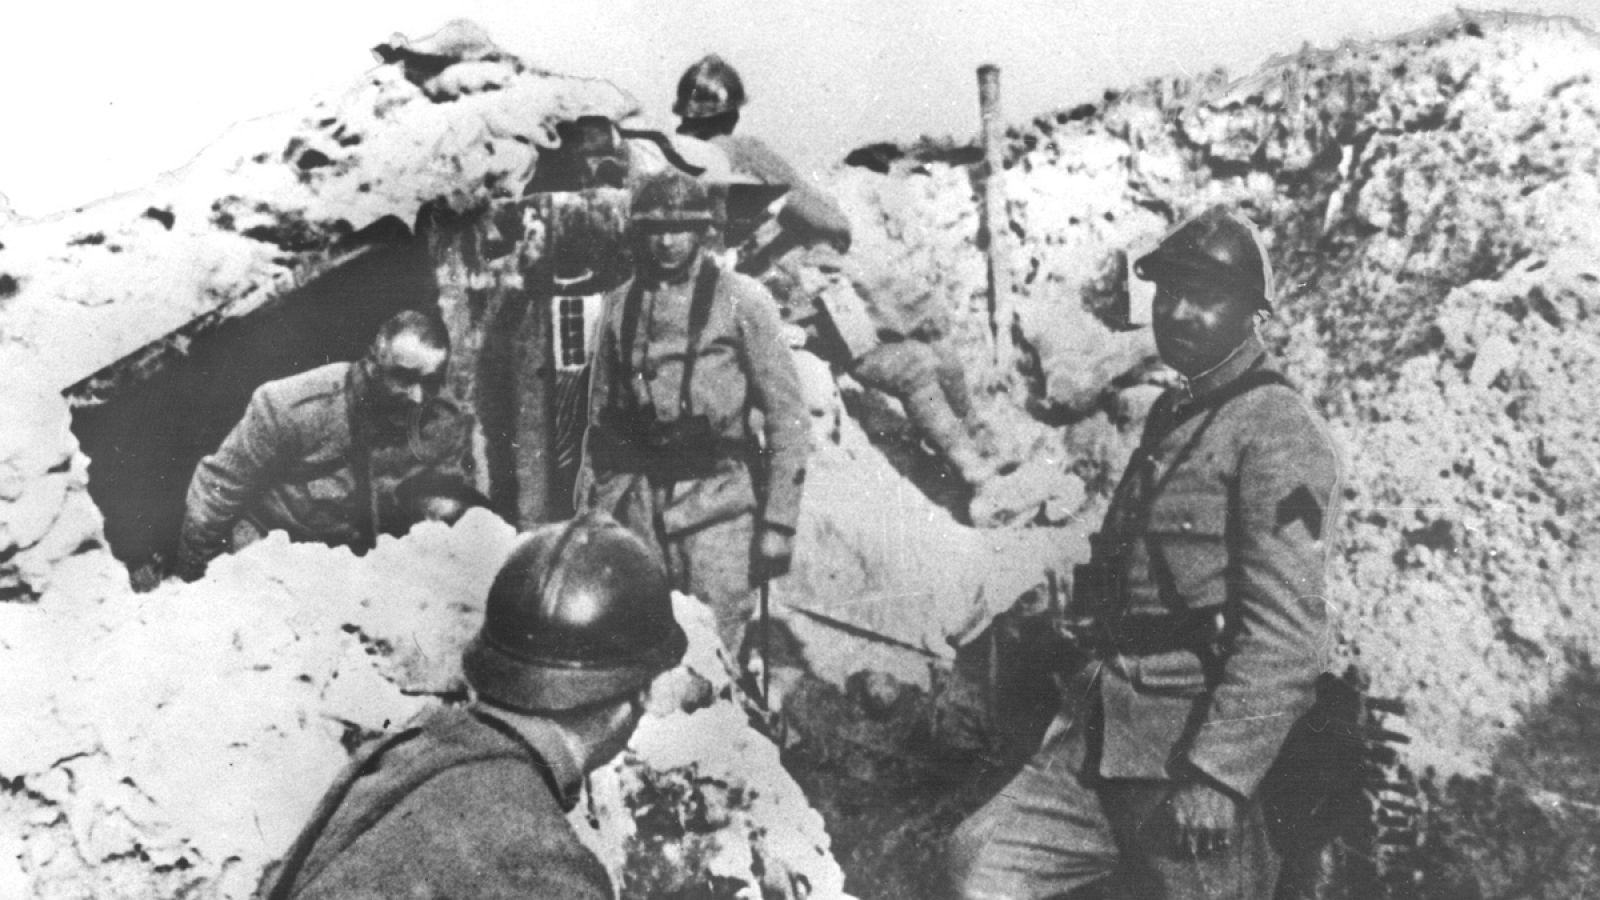 Imagen de la batalla de Verdún en la Primera Guerra Mundial (1916)